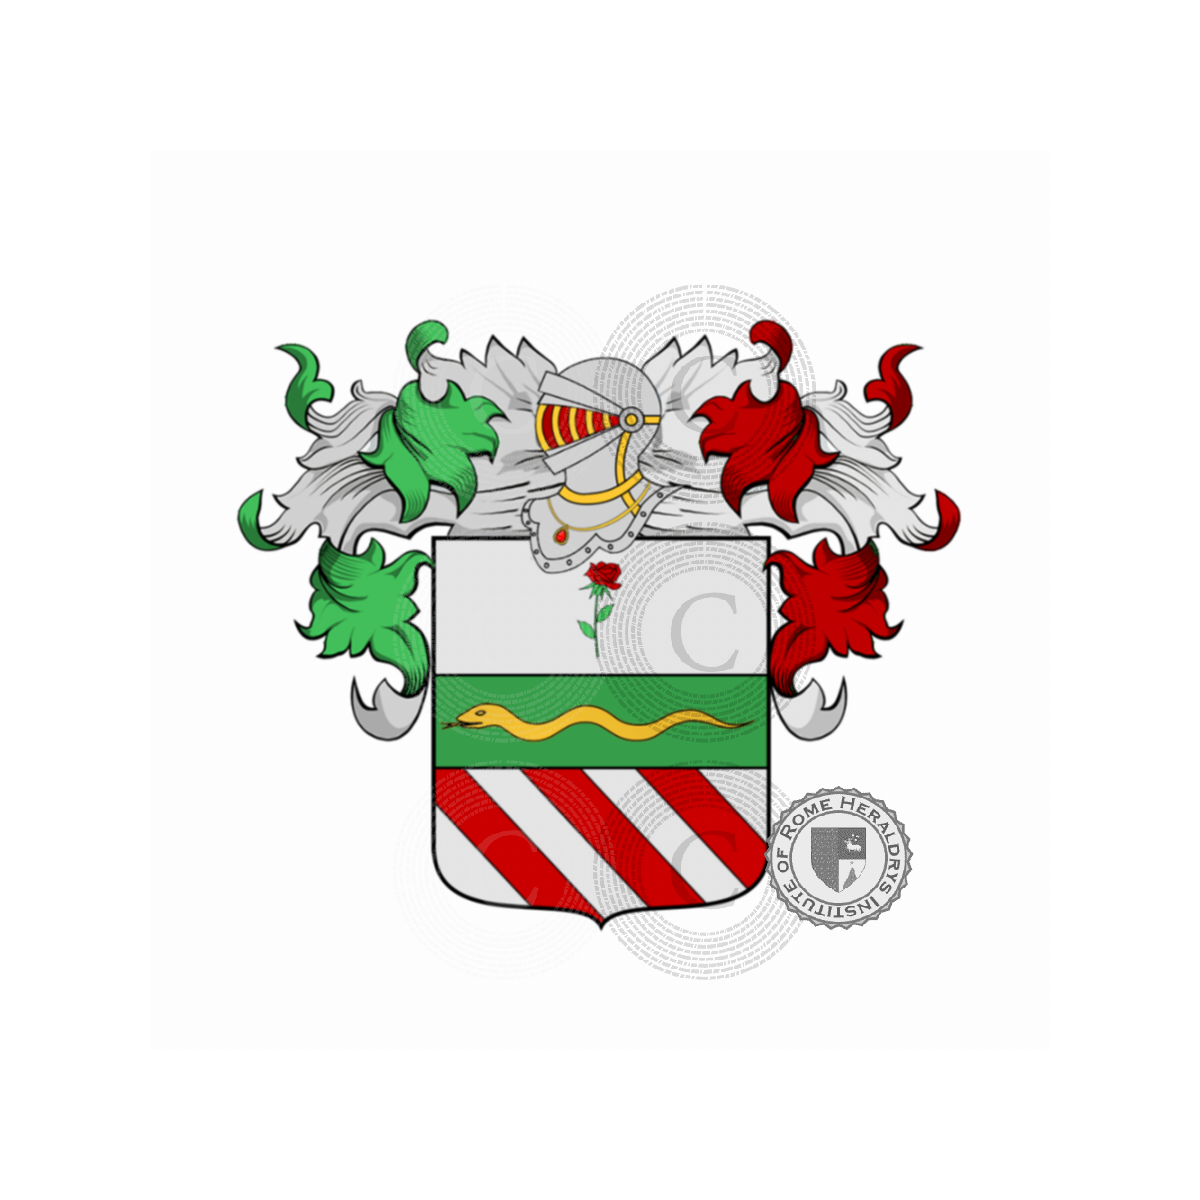 Wappen der FamilieMarcellini (ancona)